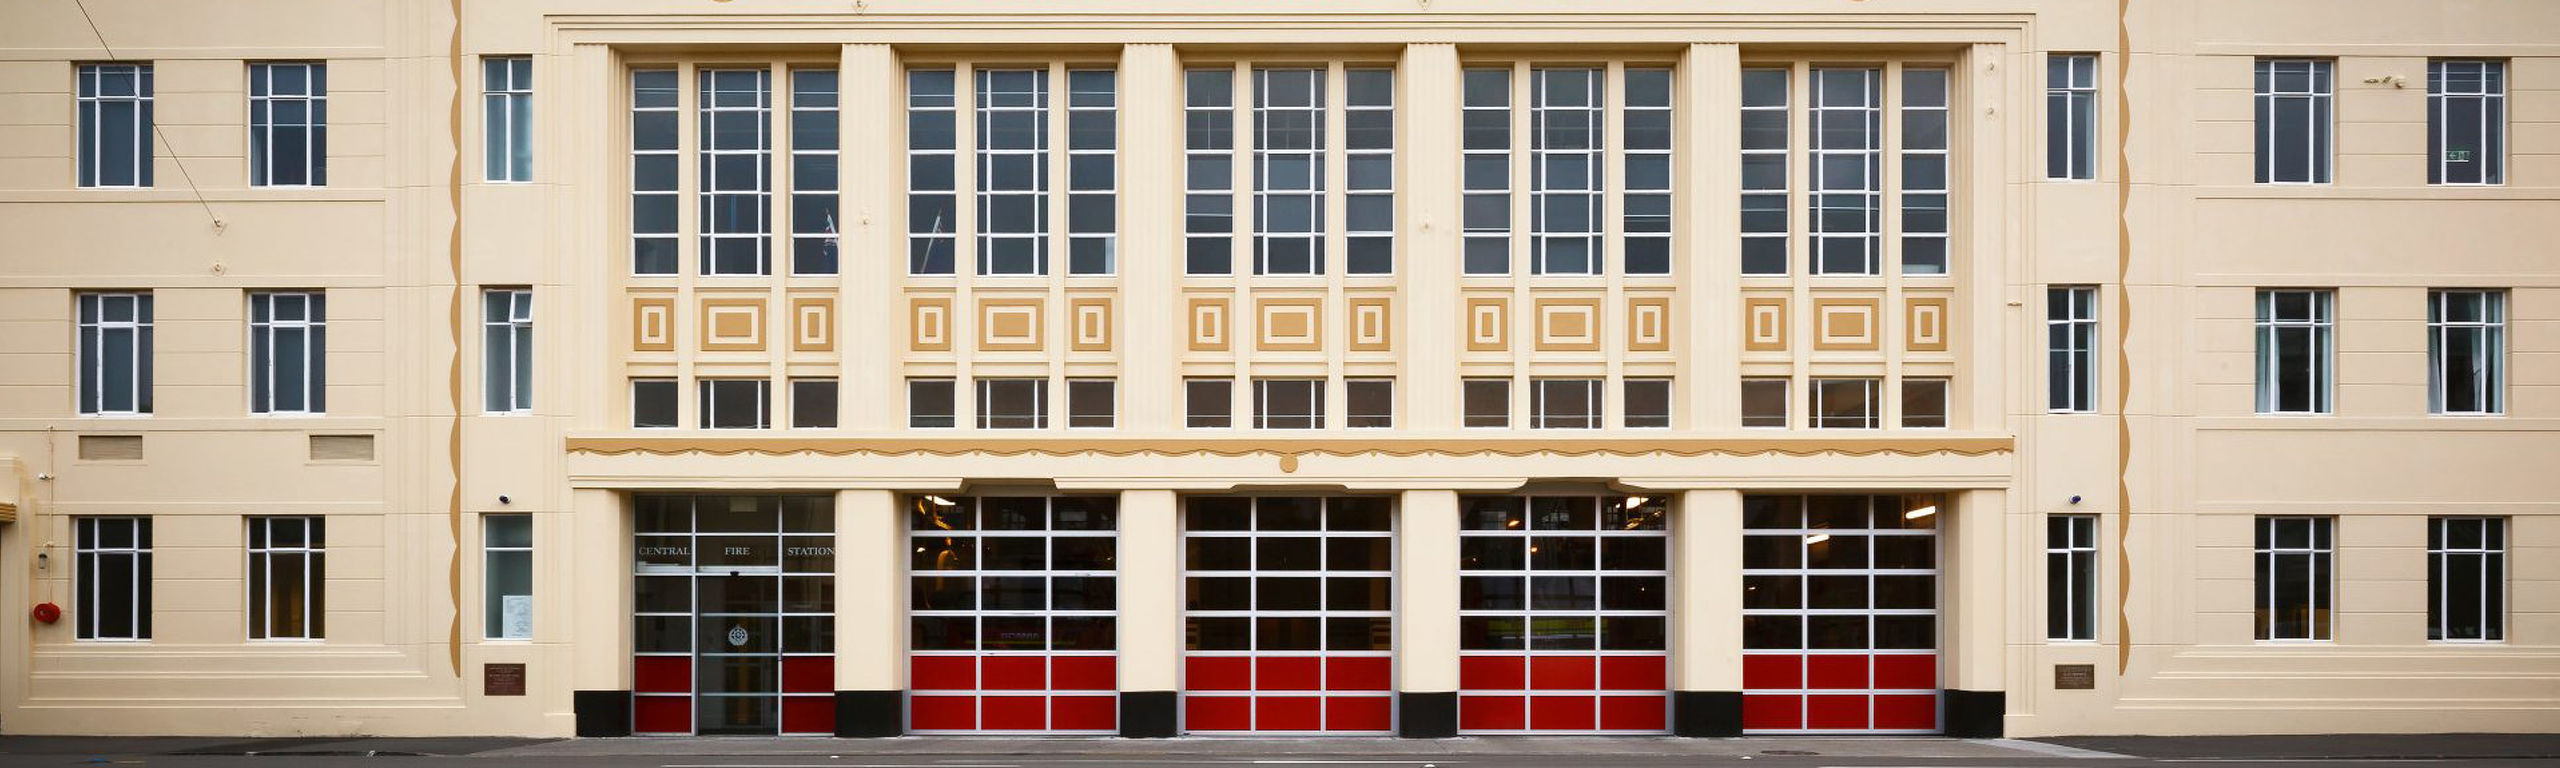 Wellington Central Fire Station